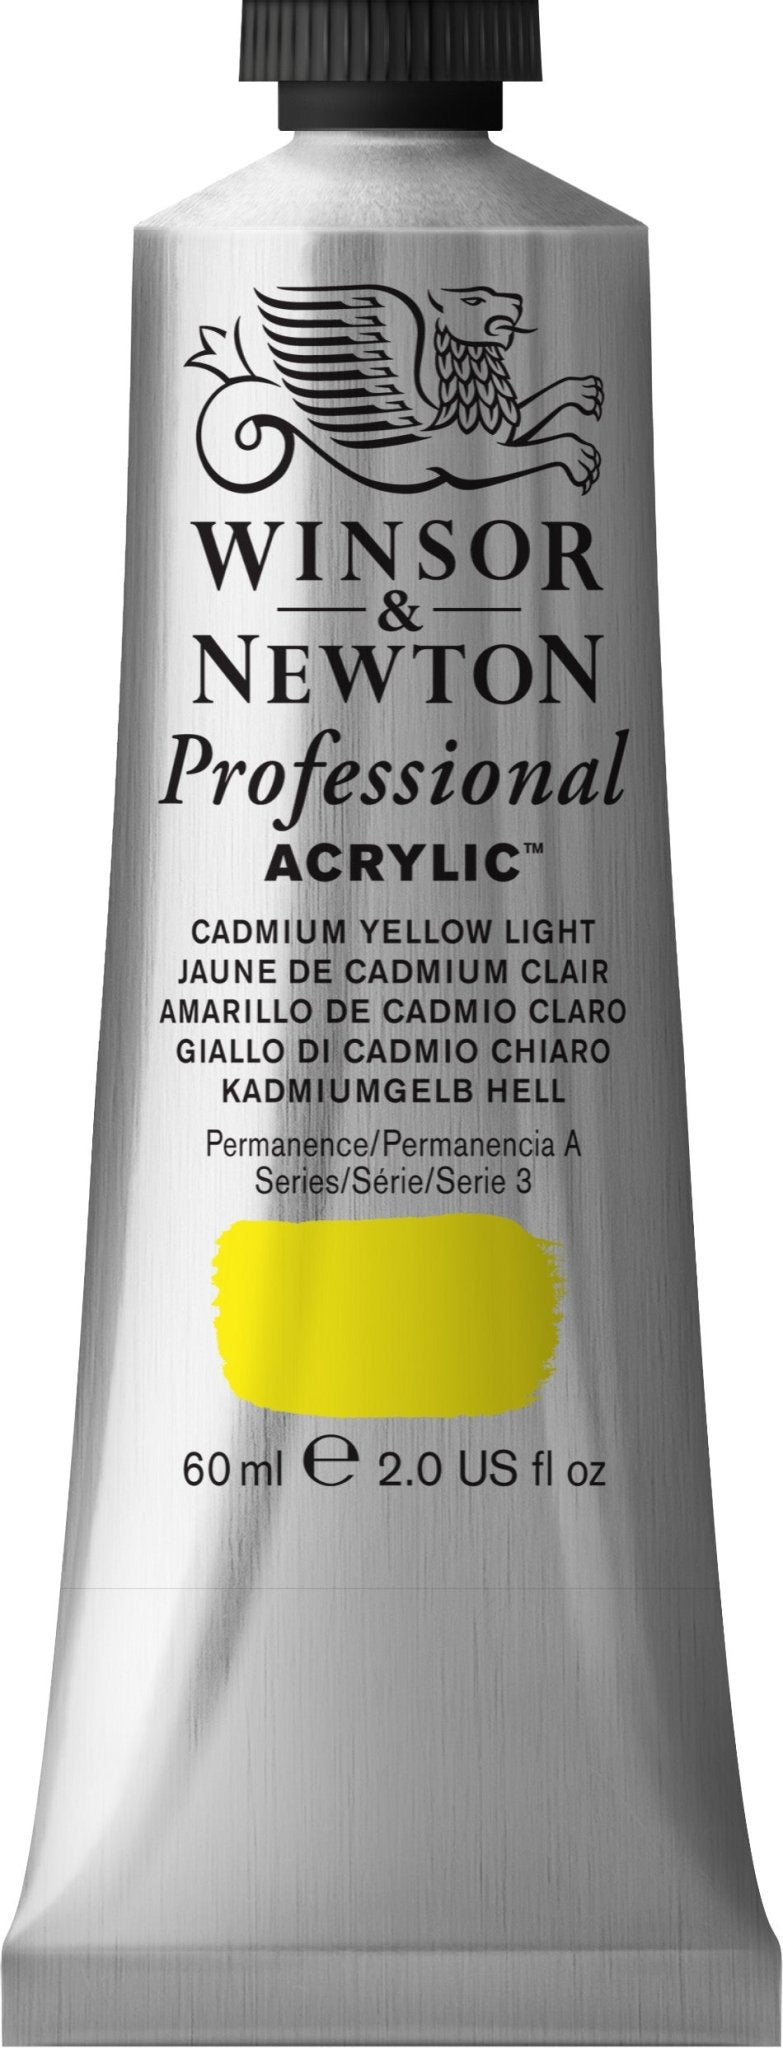 W & N Professional Acrylic 60ml Cadmium Yellow Light - theartshop.com.au